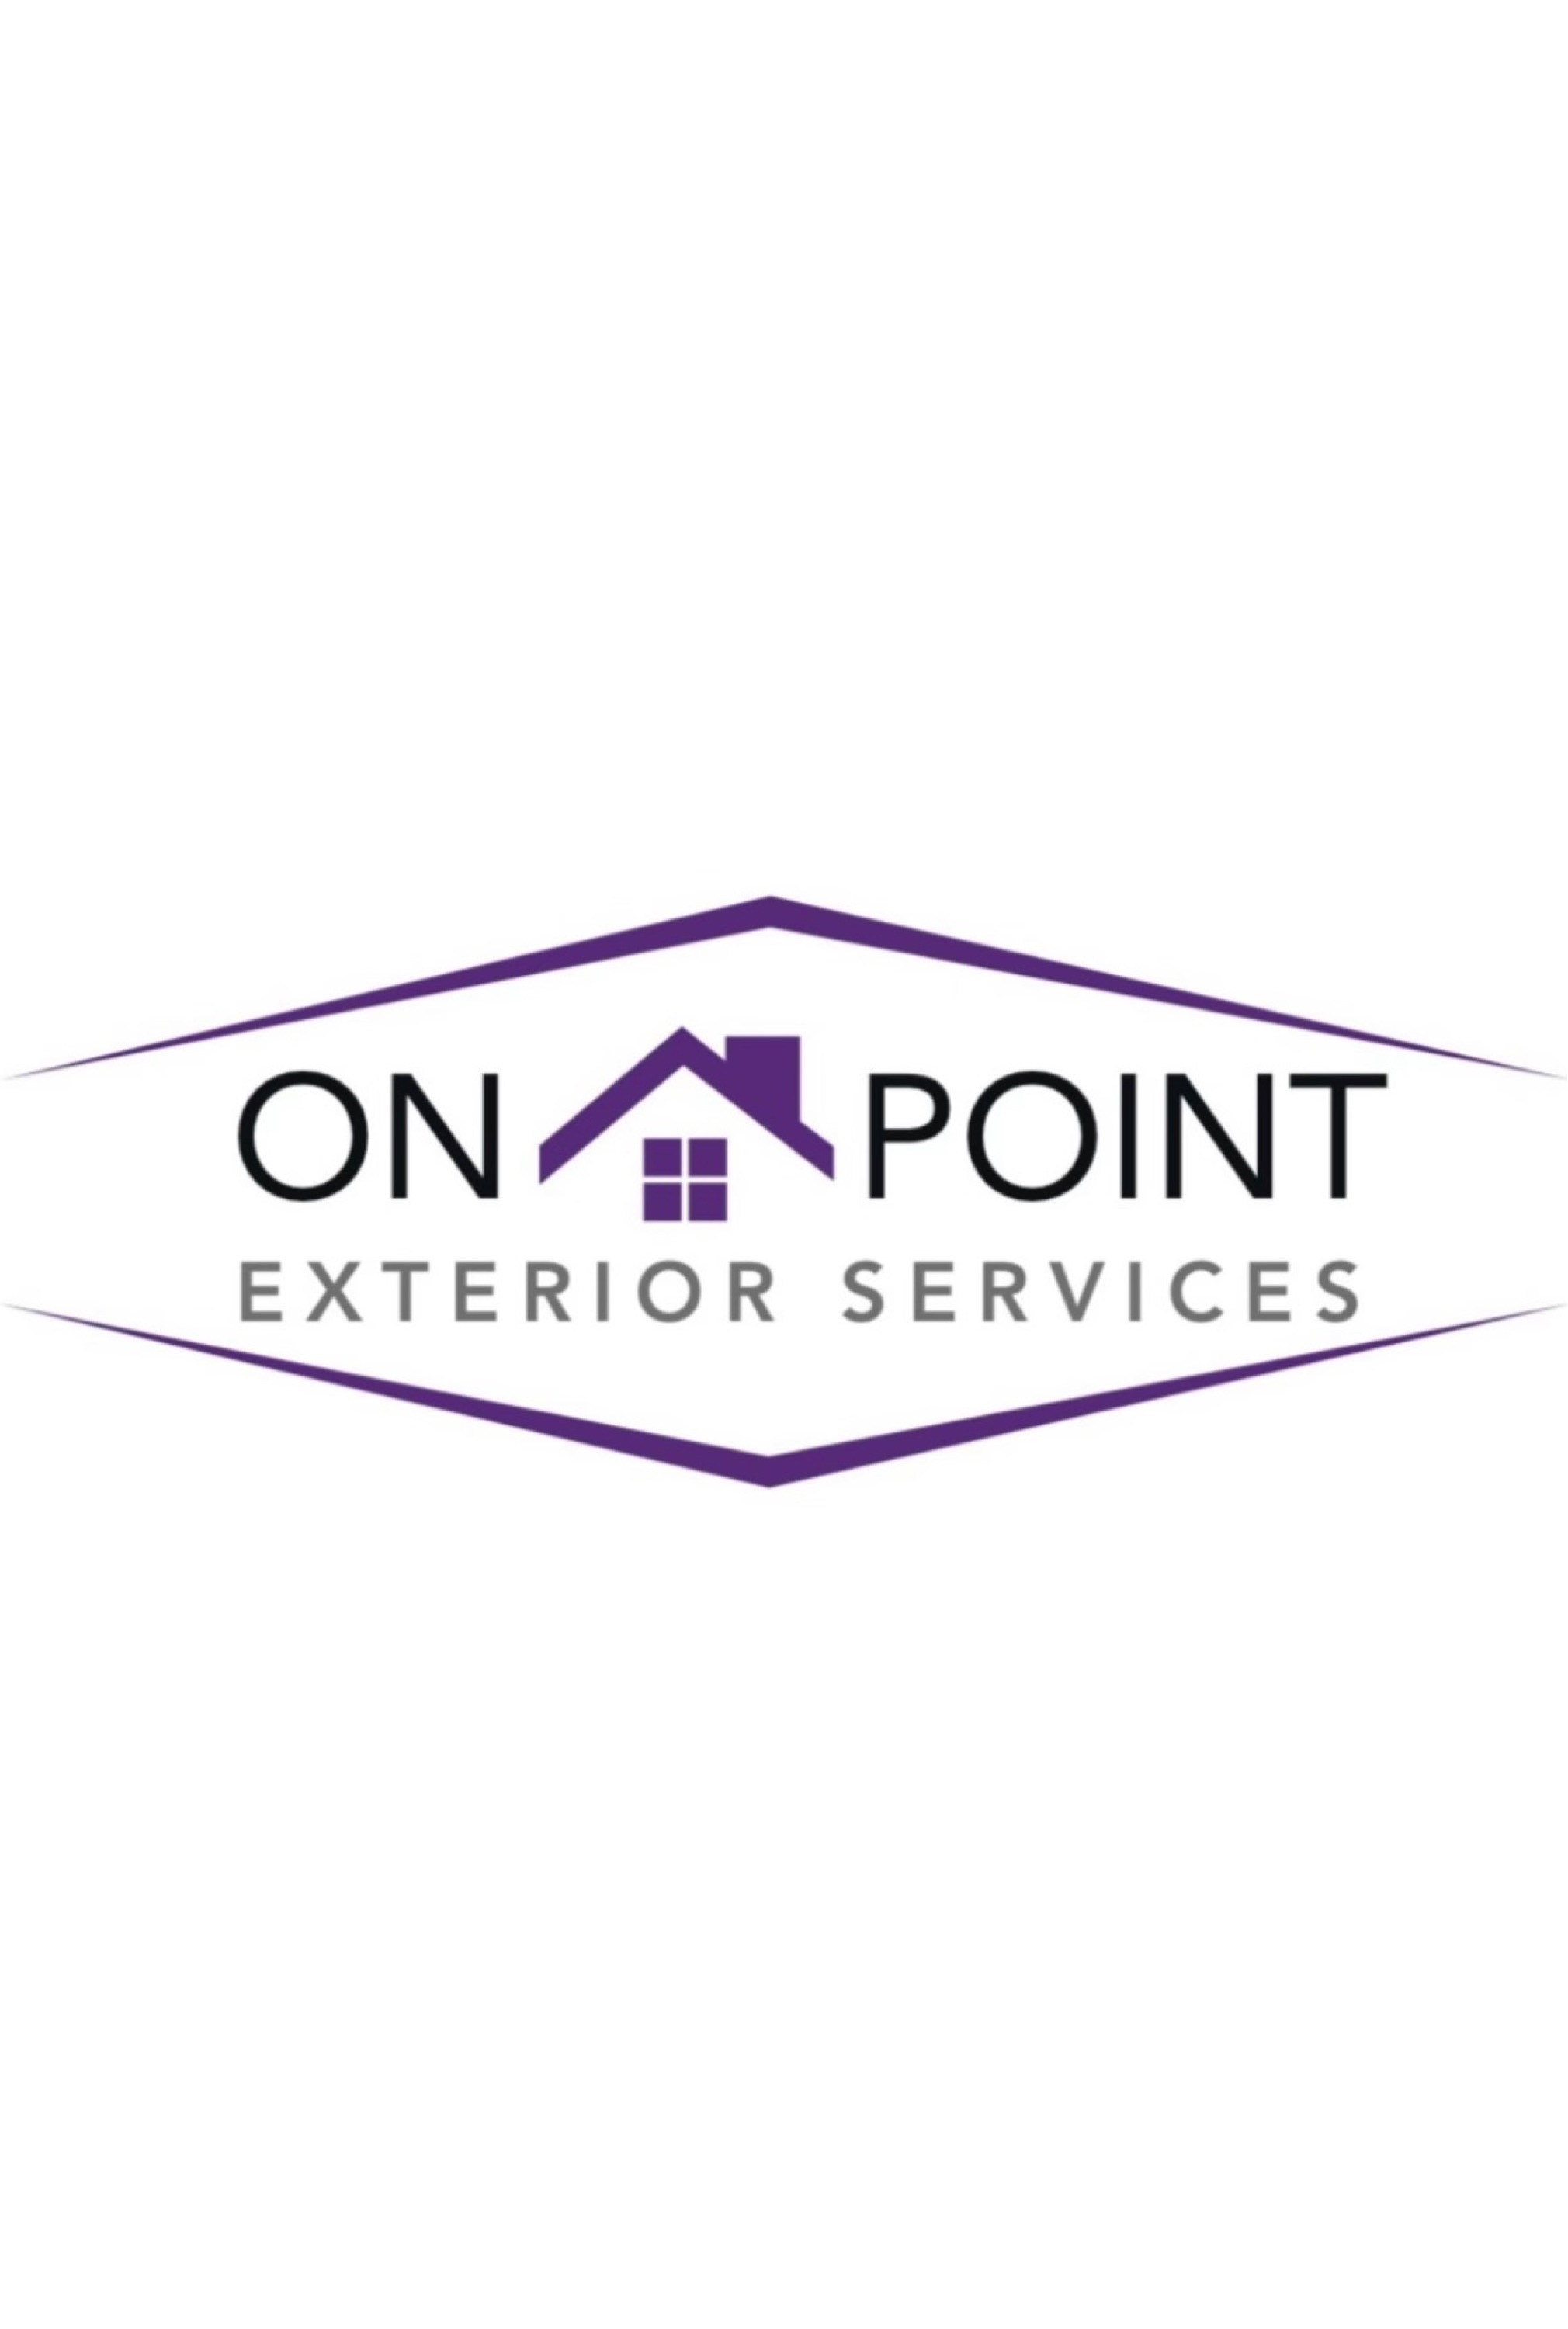 On Point Exterior Services, LLC Logo